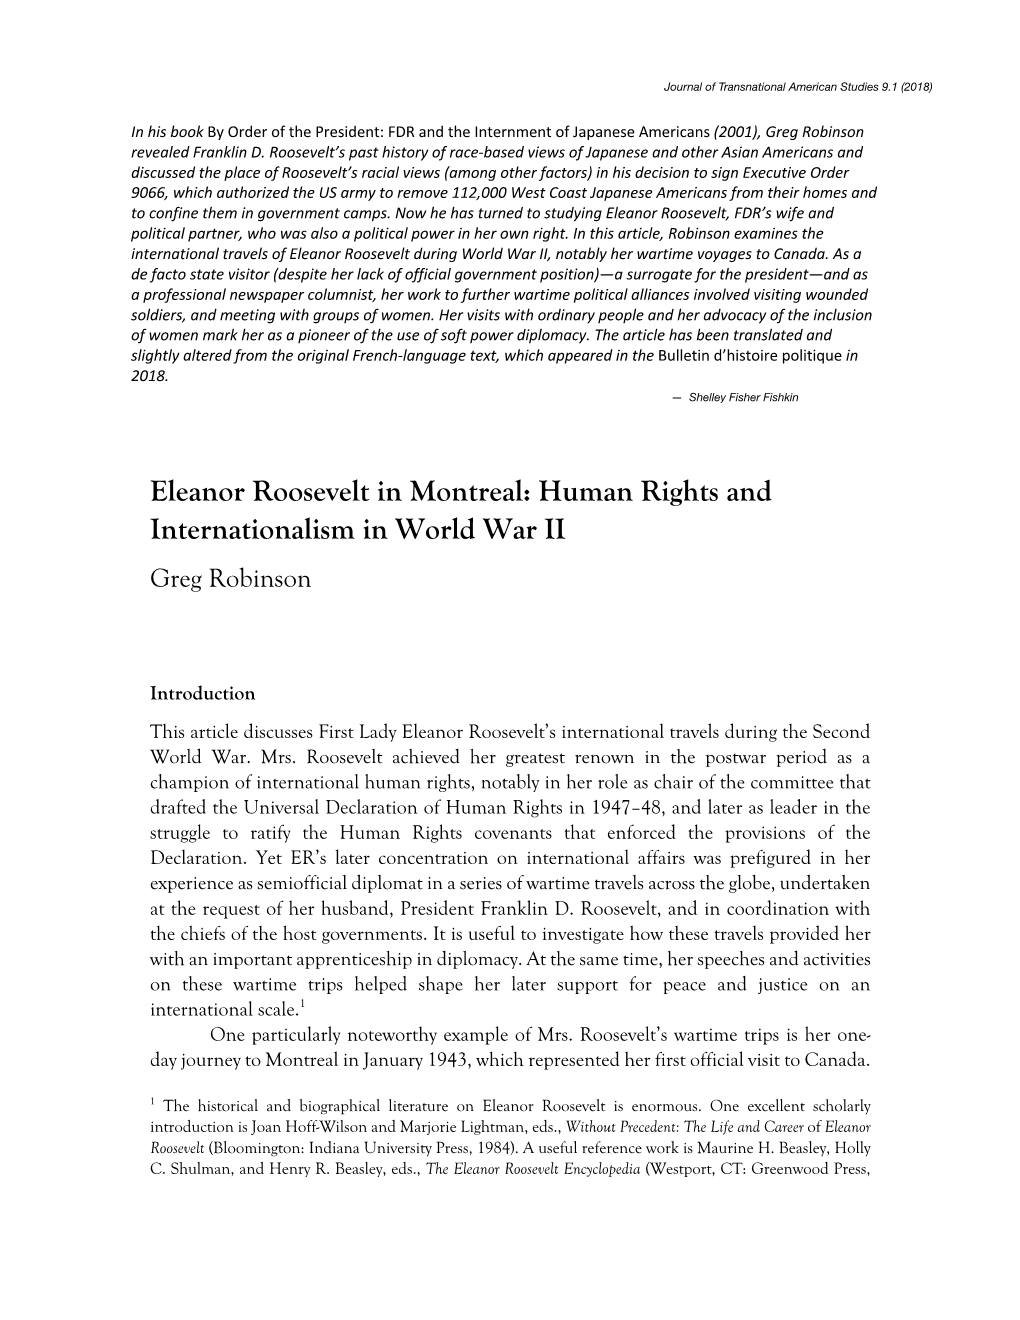 Eleanor Roosevelt in Montreal: Human Rights and Internationalism in World War II Greg Robinson